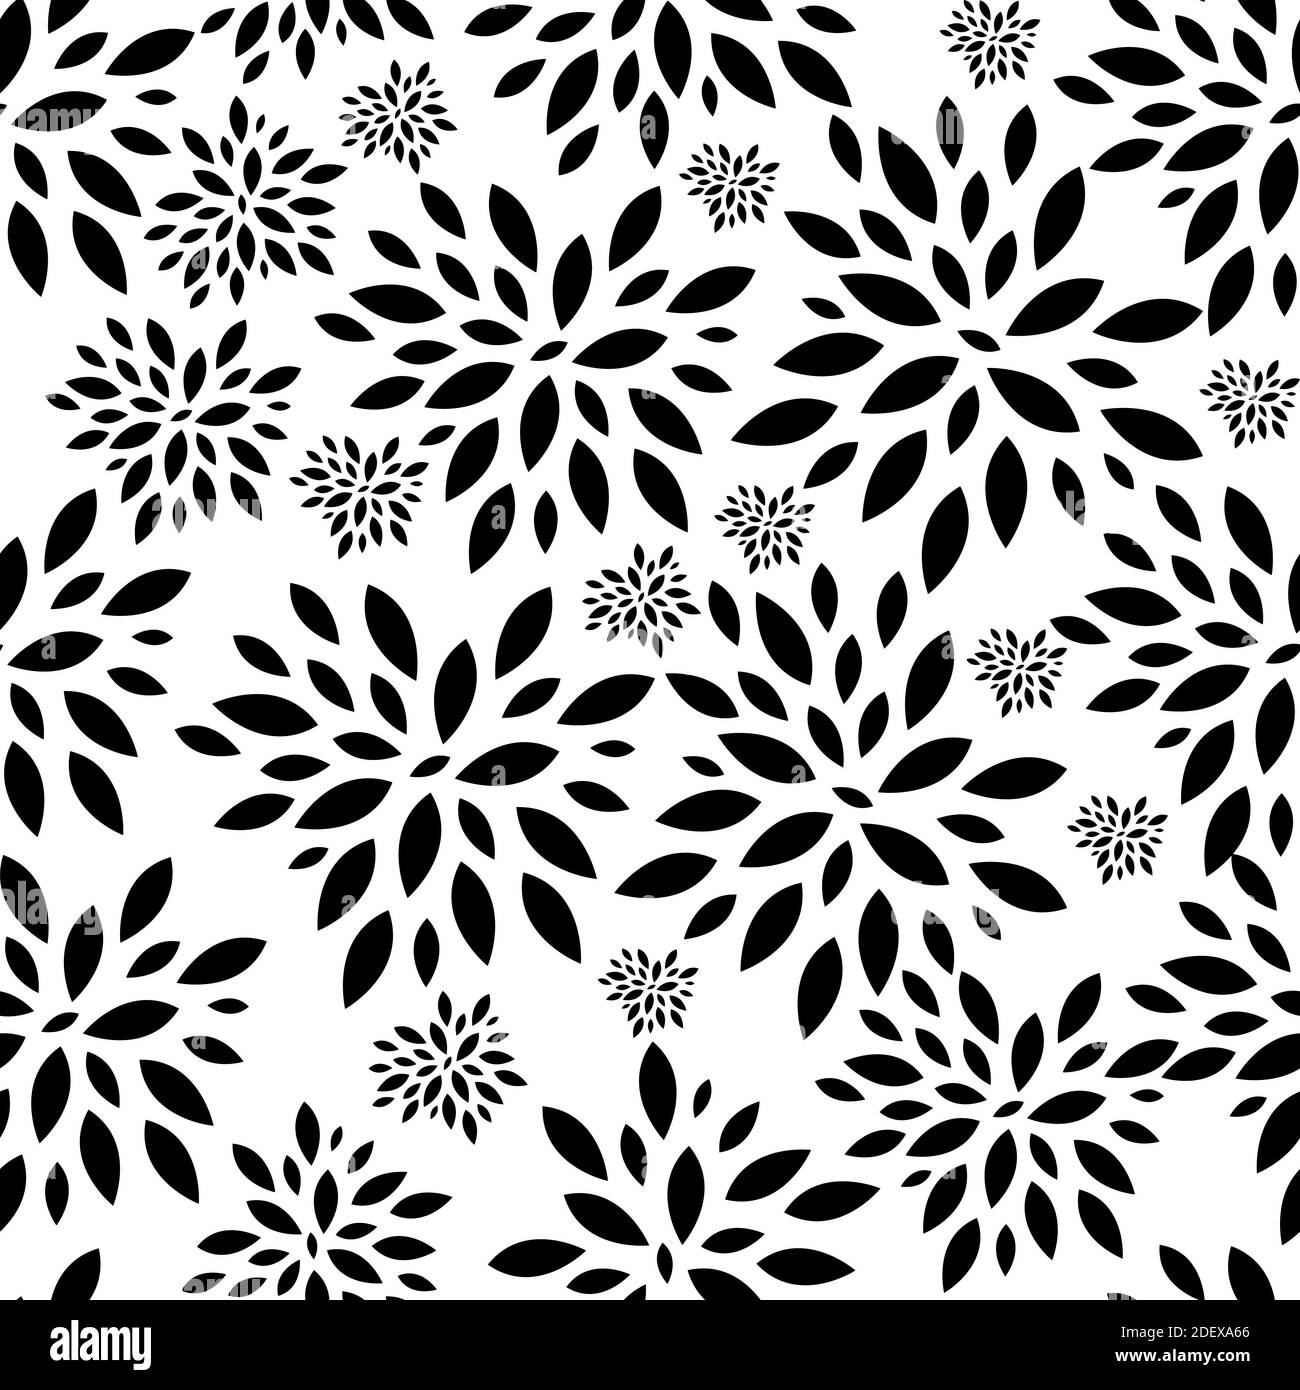 Flower Leaves Seamless Pattern Background Illustration Stock Photo